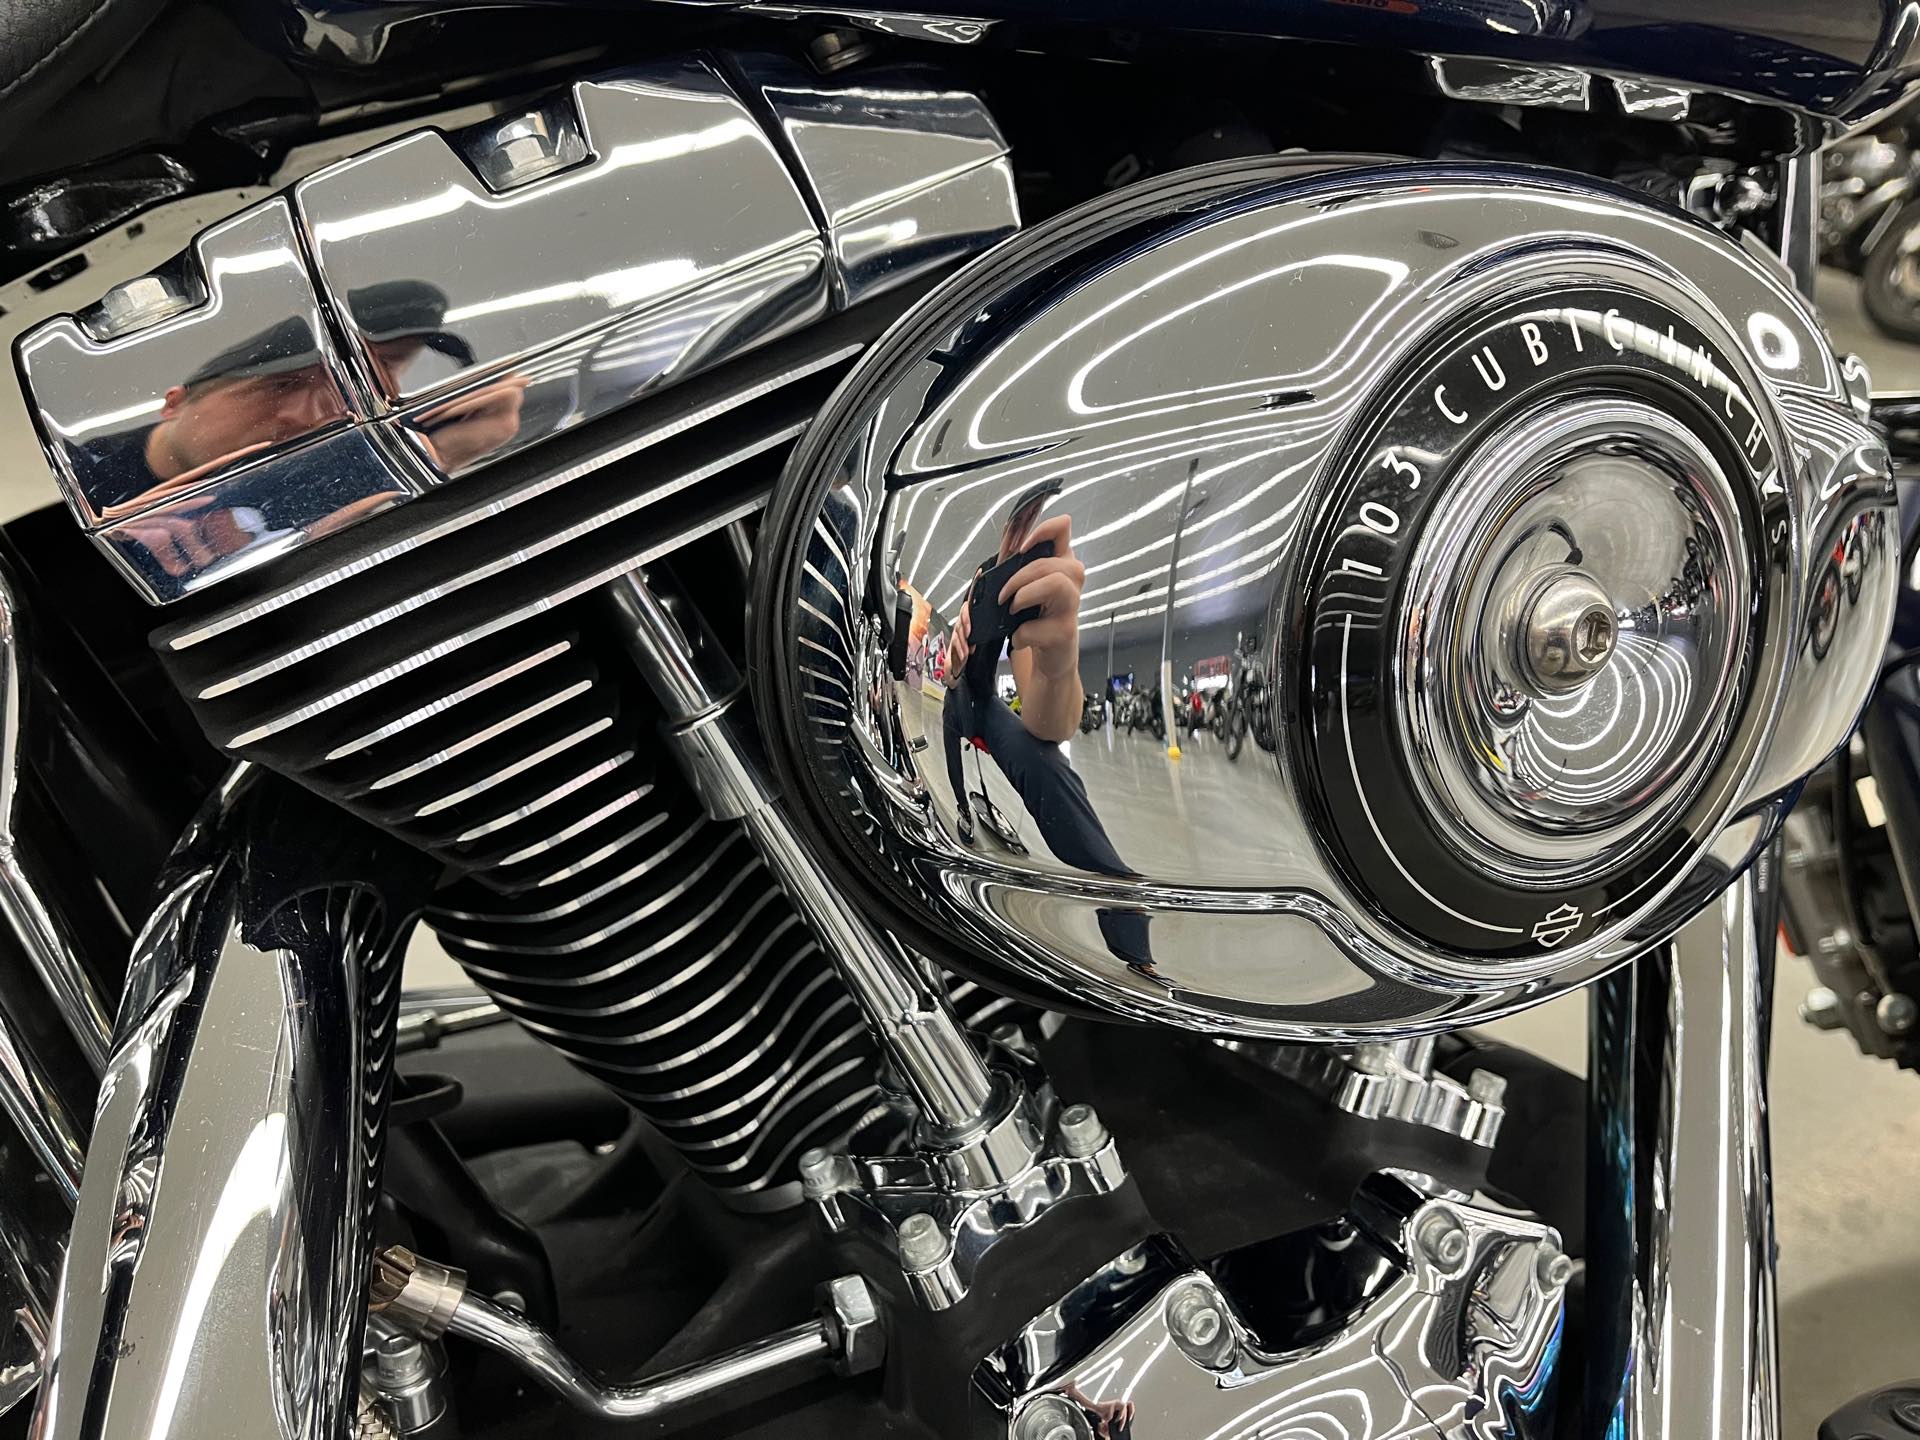 2013 Harley-Davidson Softail Fat Boy at Aces Motorcycles - Denver